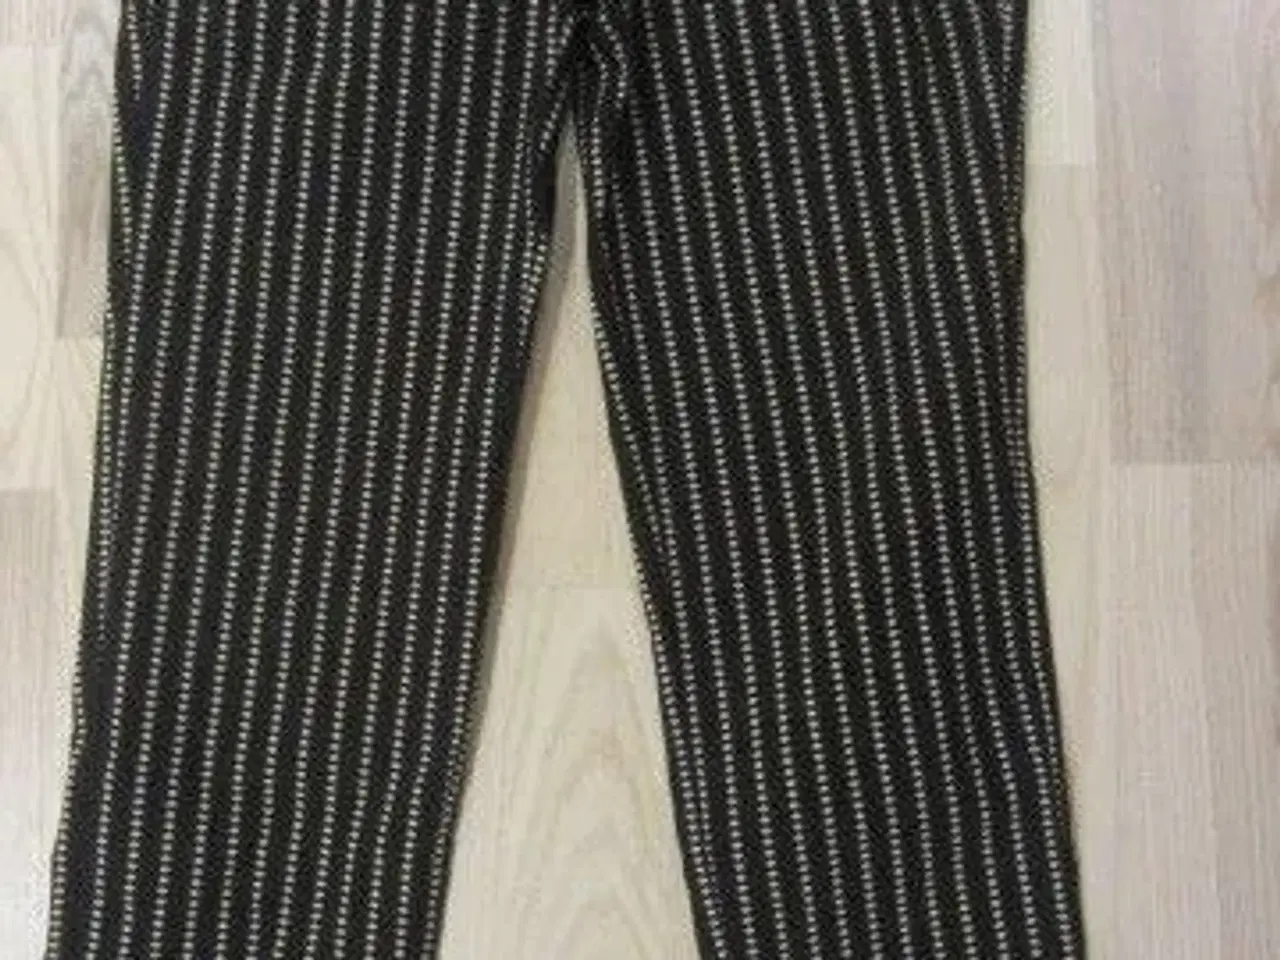 Billede 1 - Str. M, EKSTREM elastiske bukser